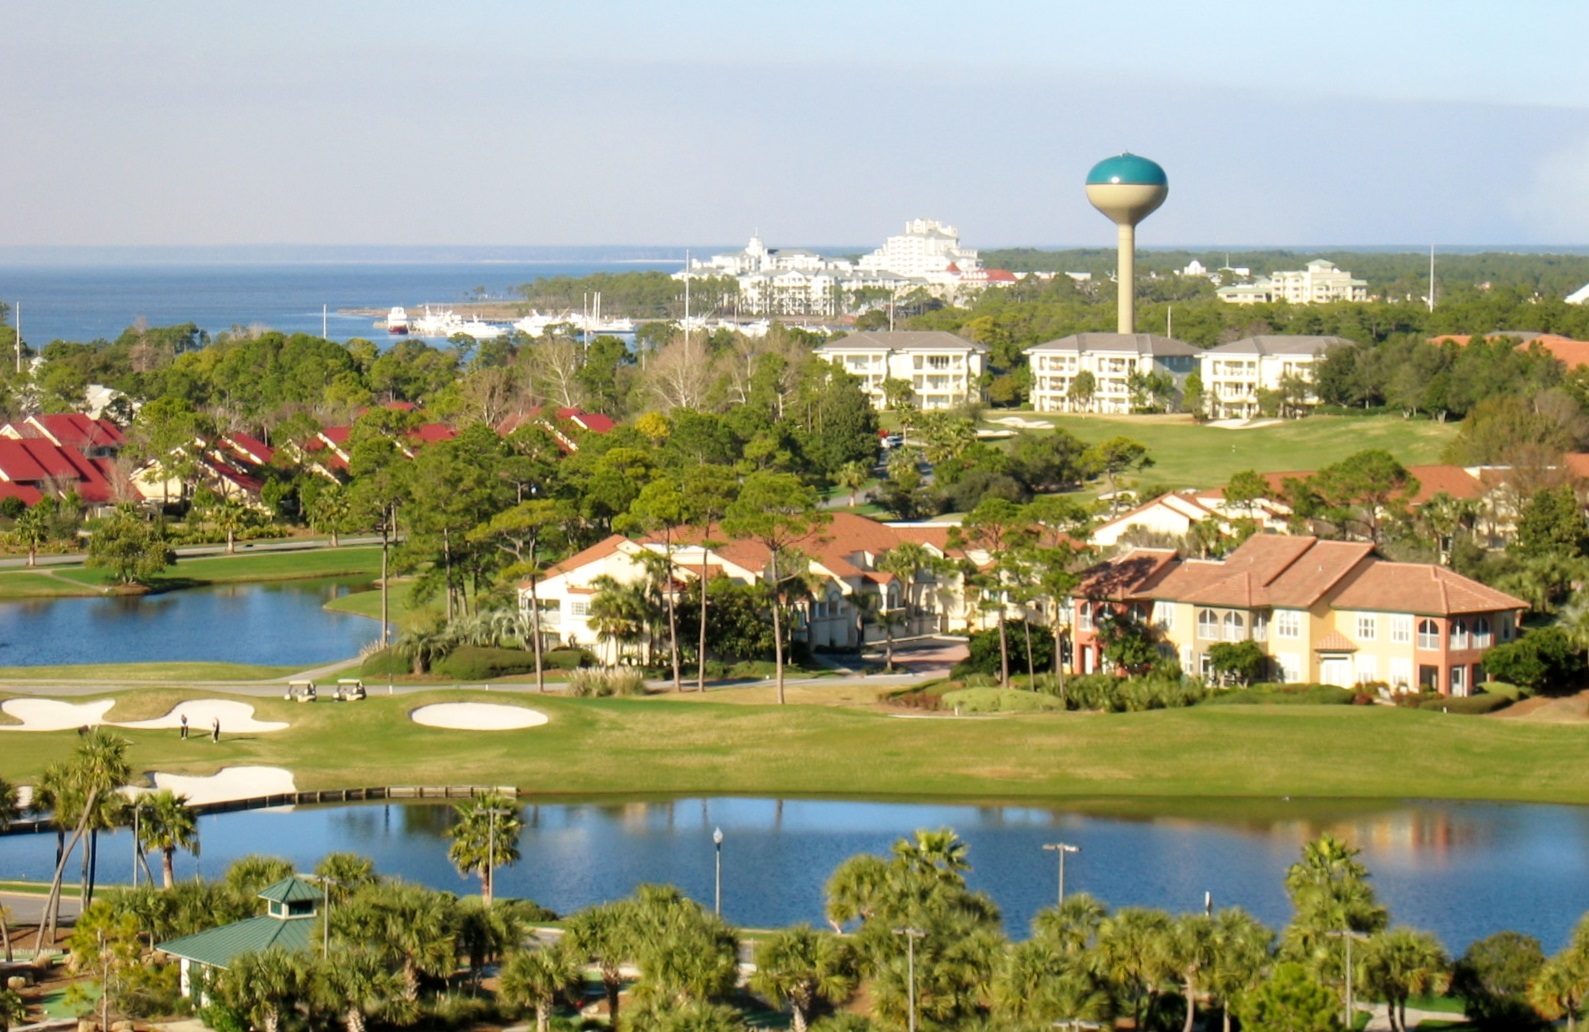 The Sandestin Golf & Beach Resort